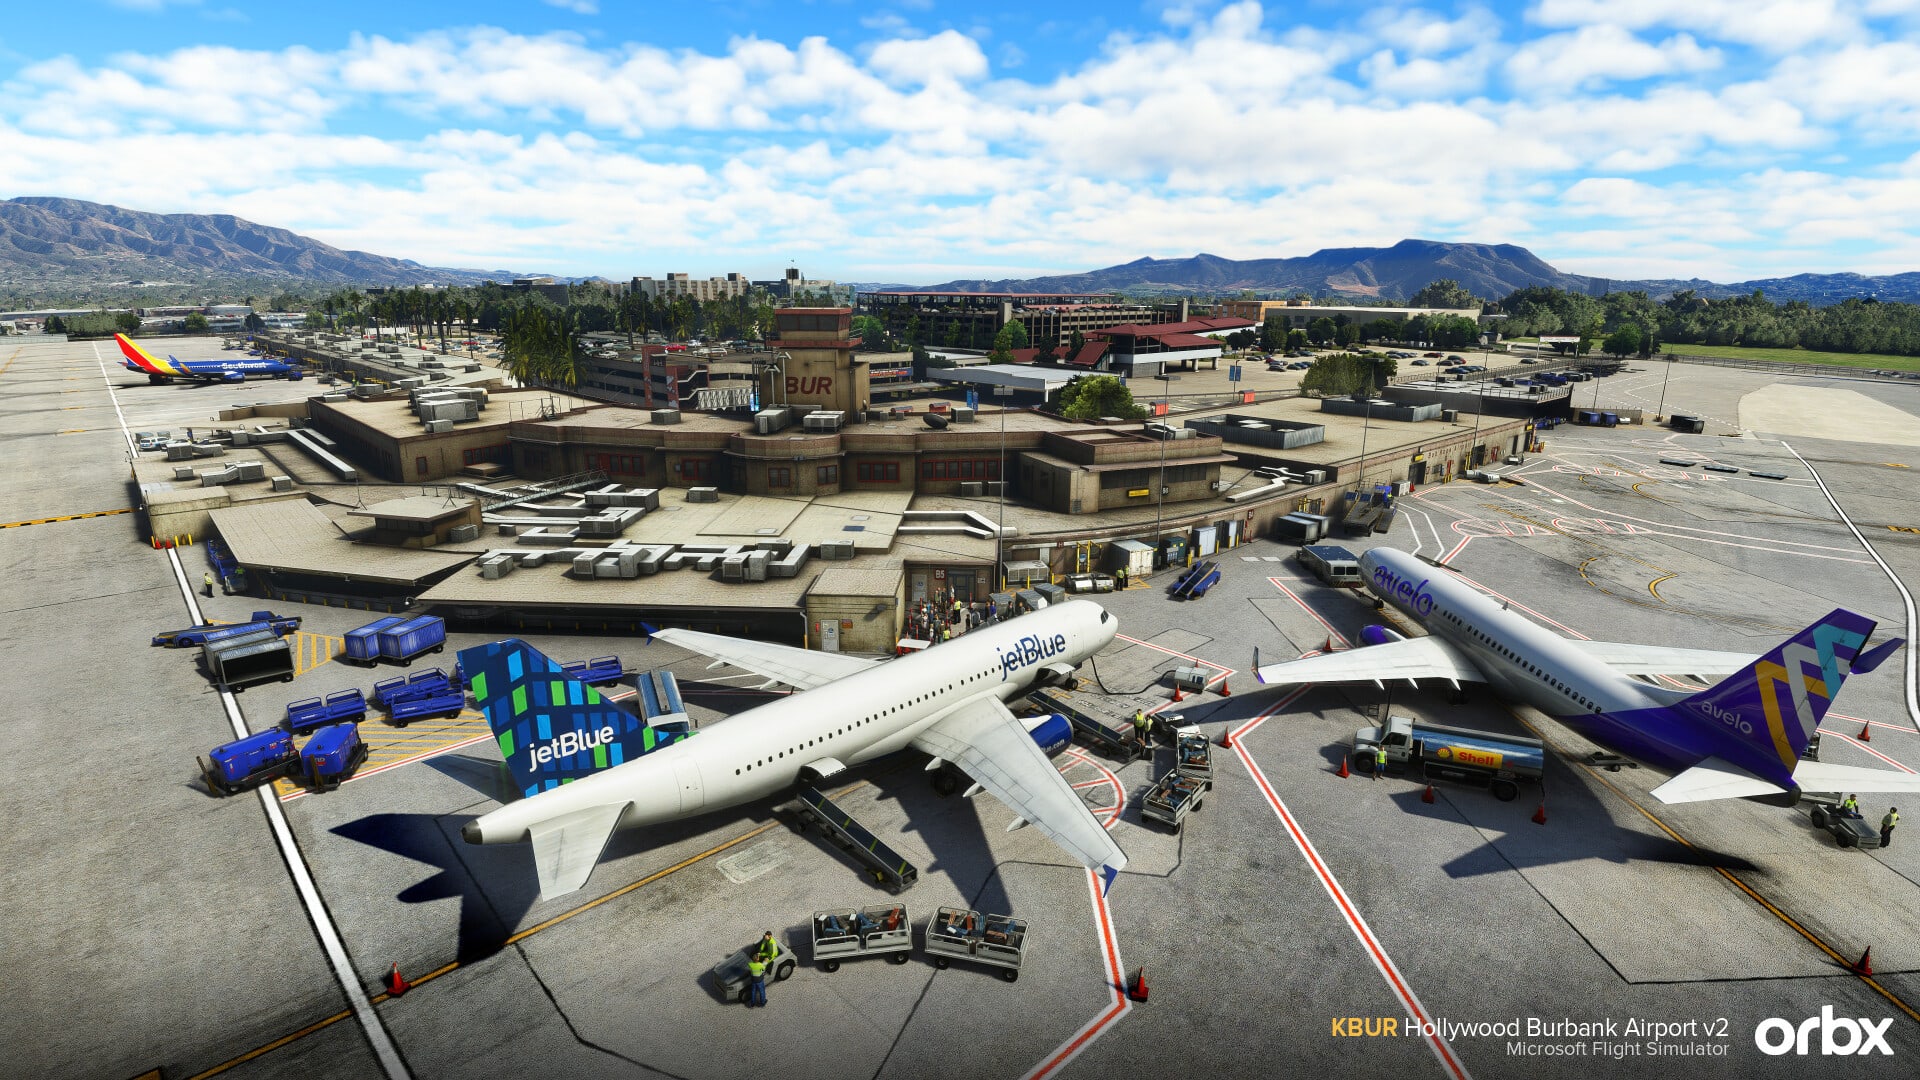 Orbx Announces Hollywood Burbank Airport v2 for MSFS - Microsoft Flight Simulator, FlightFX